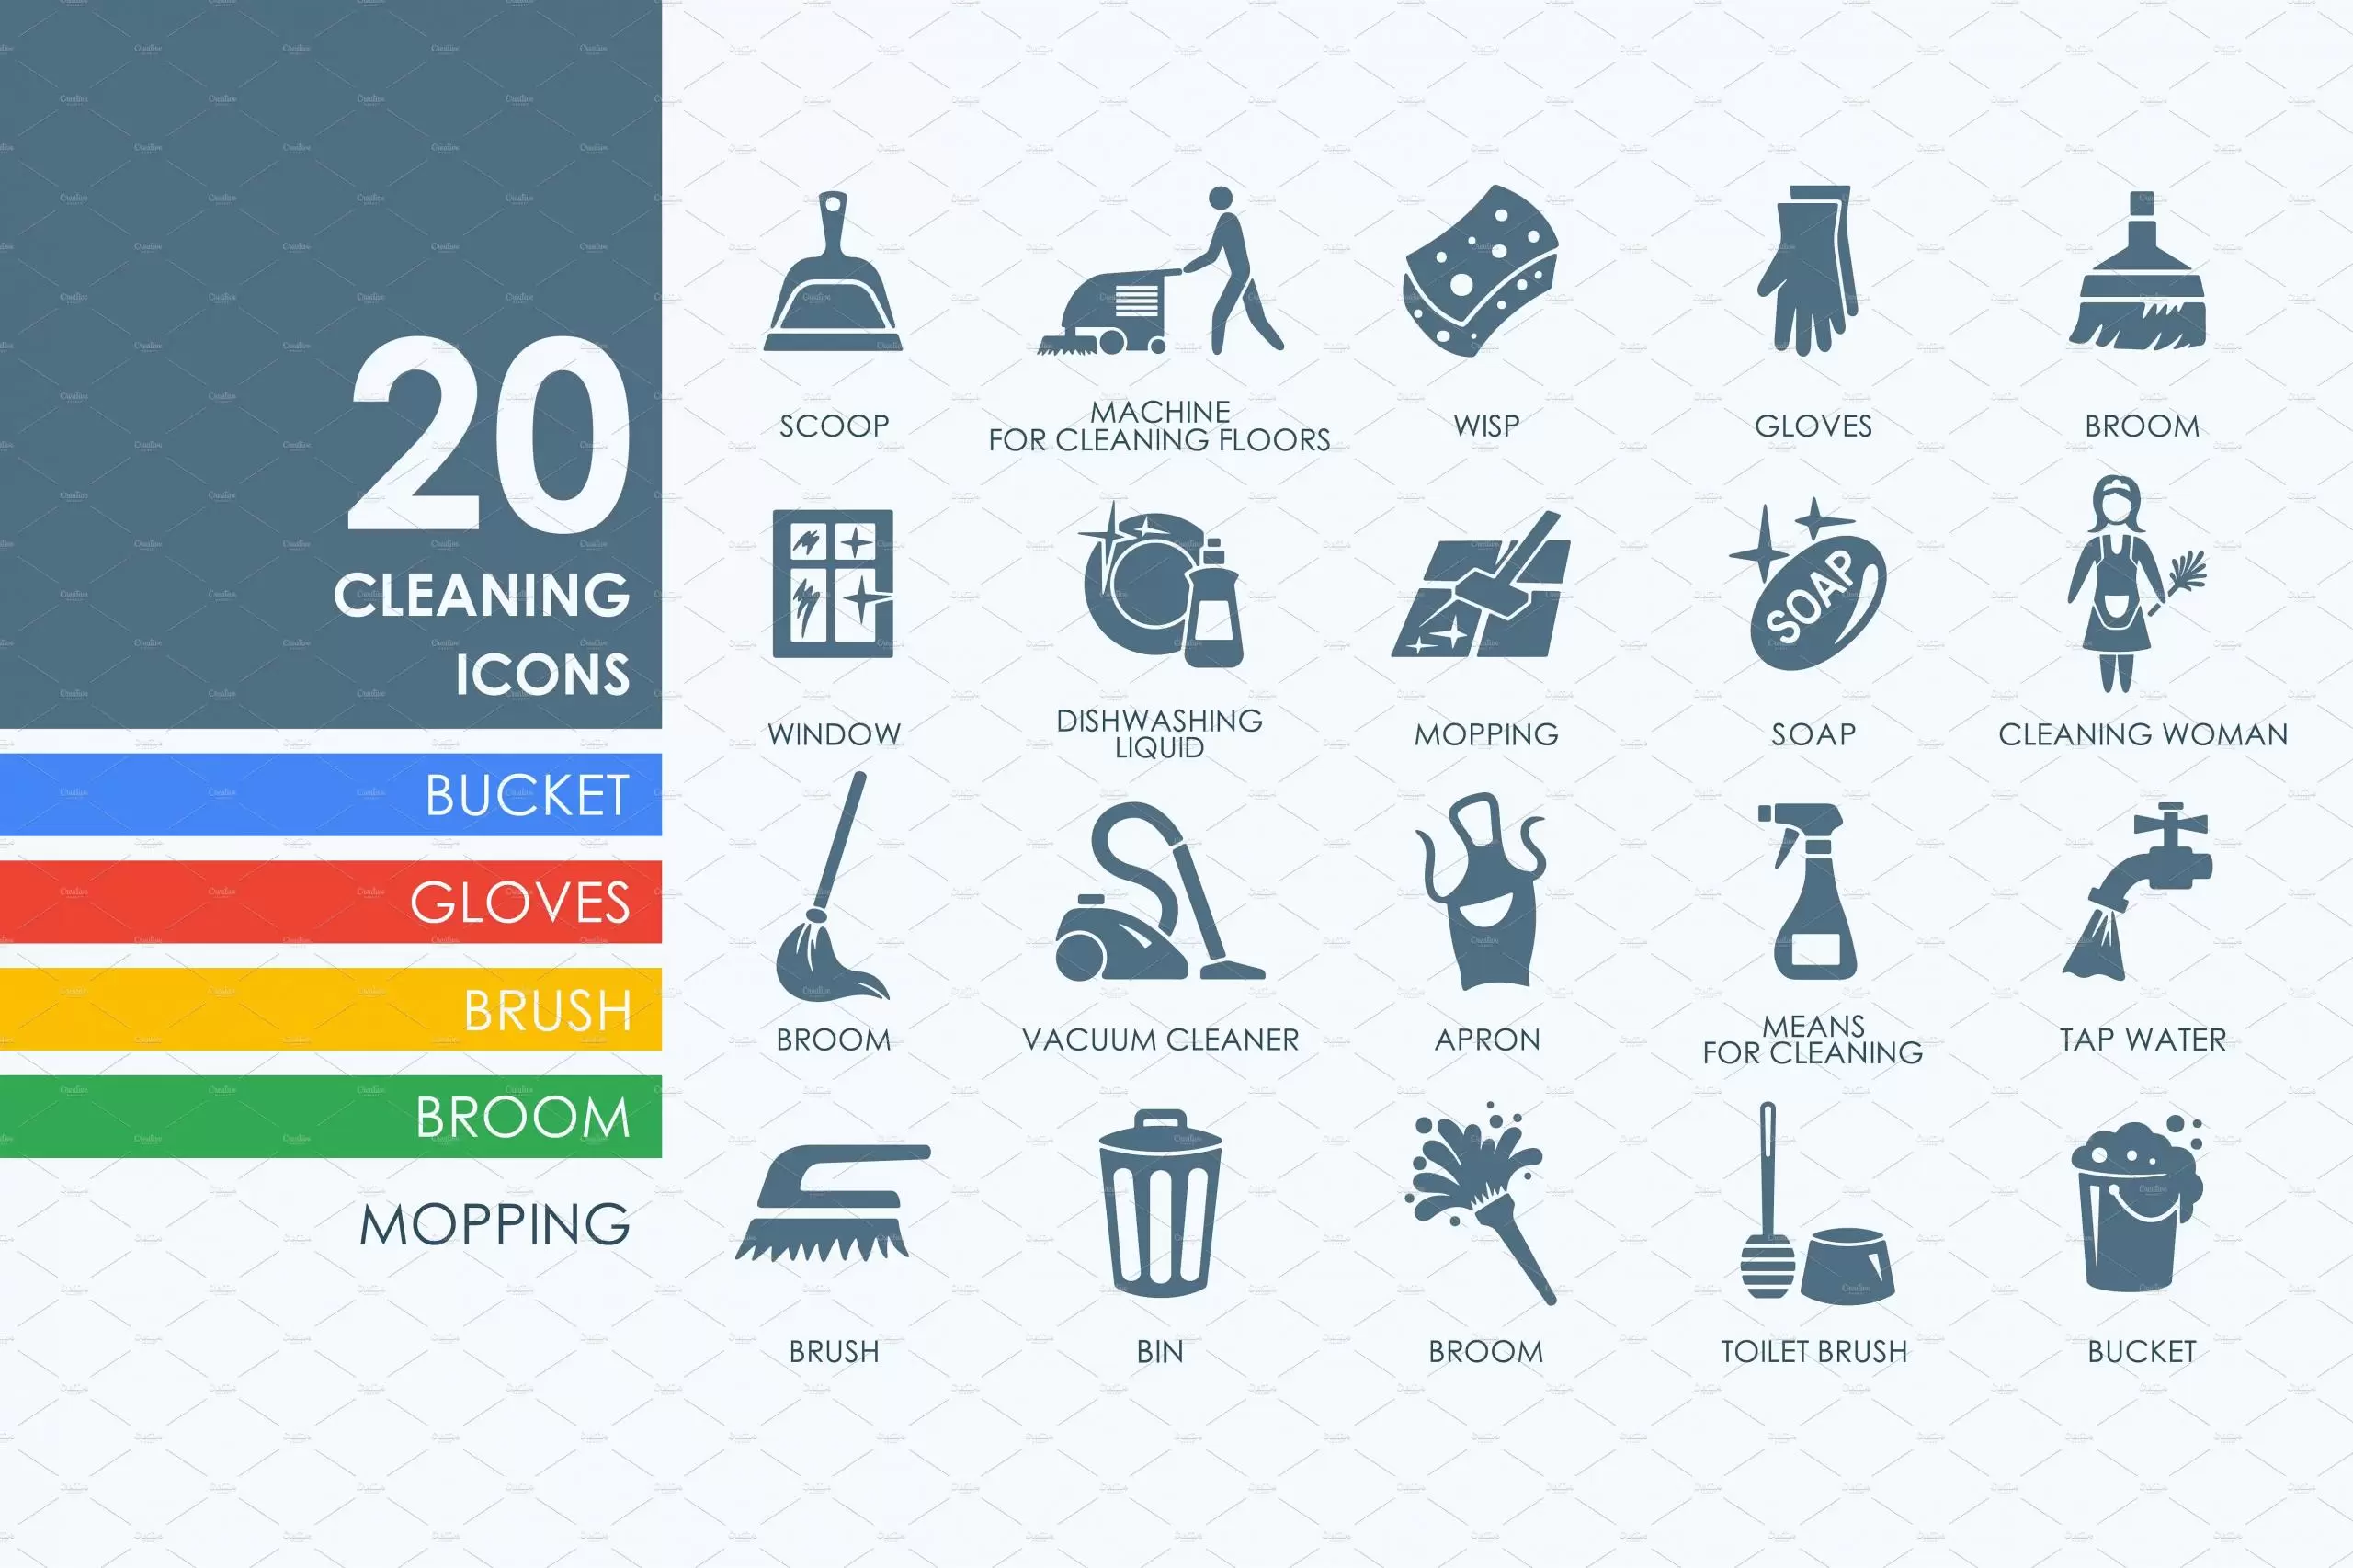 清洁用品图标素材 20 cleaning icons插图